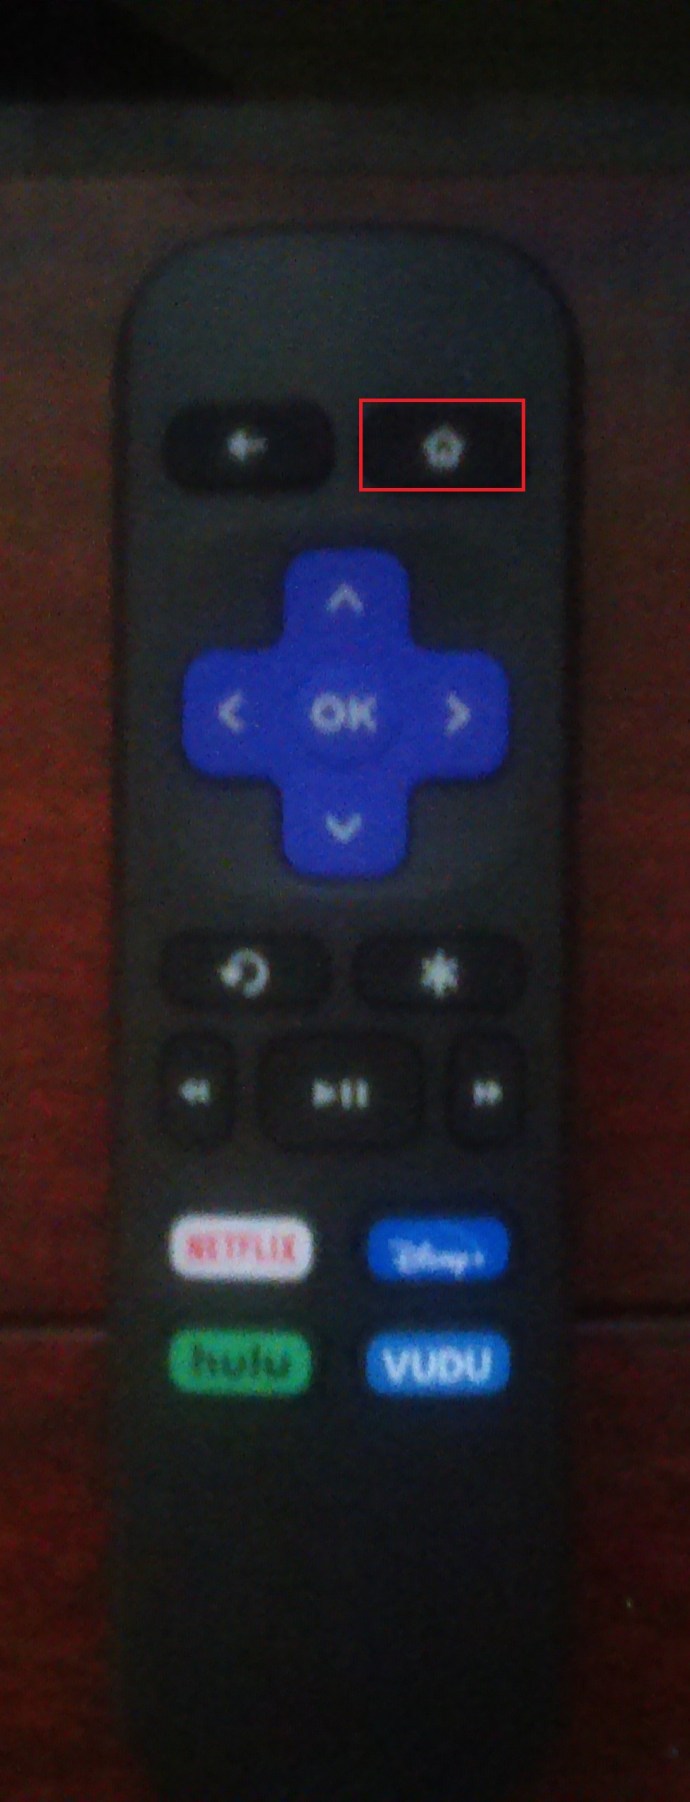 Roku Remote Home button